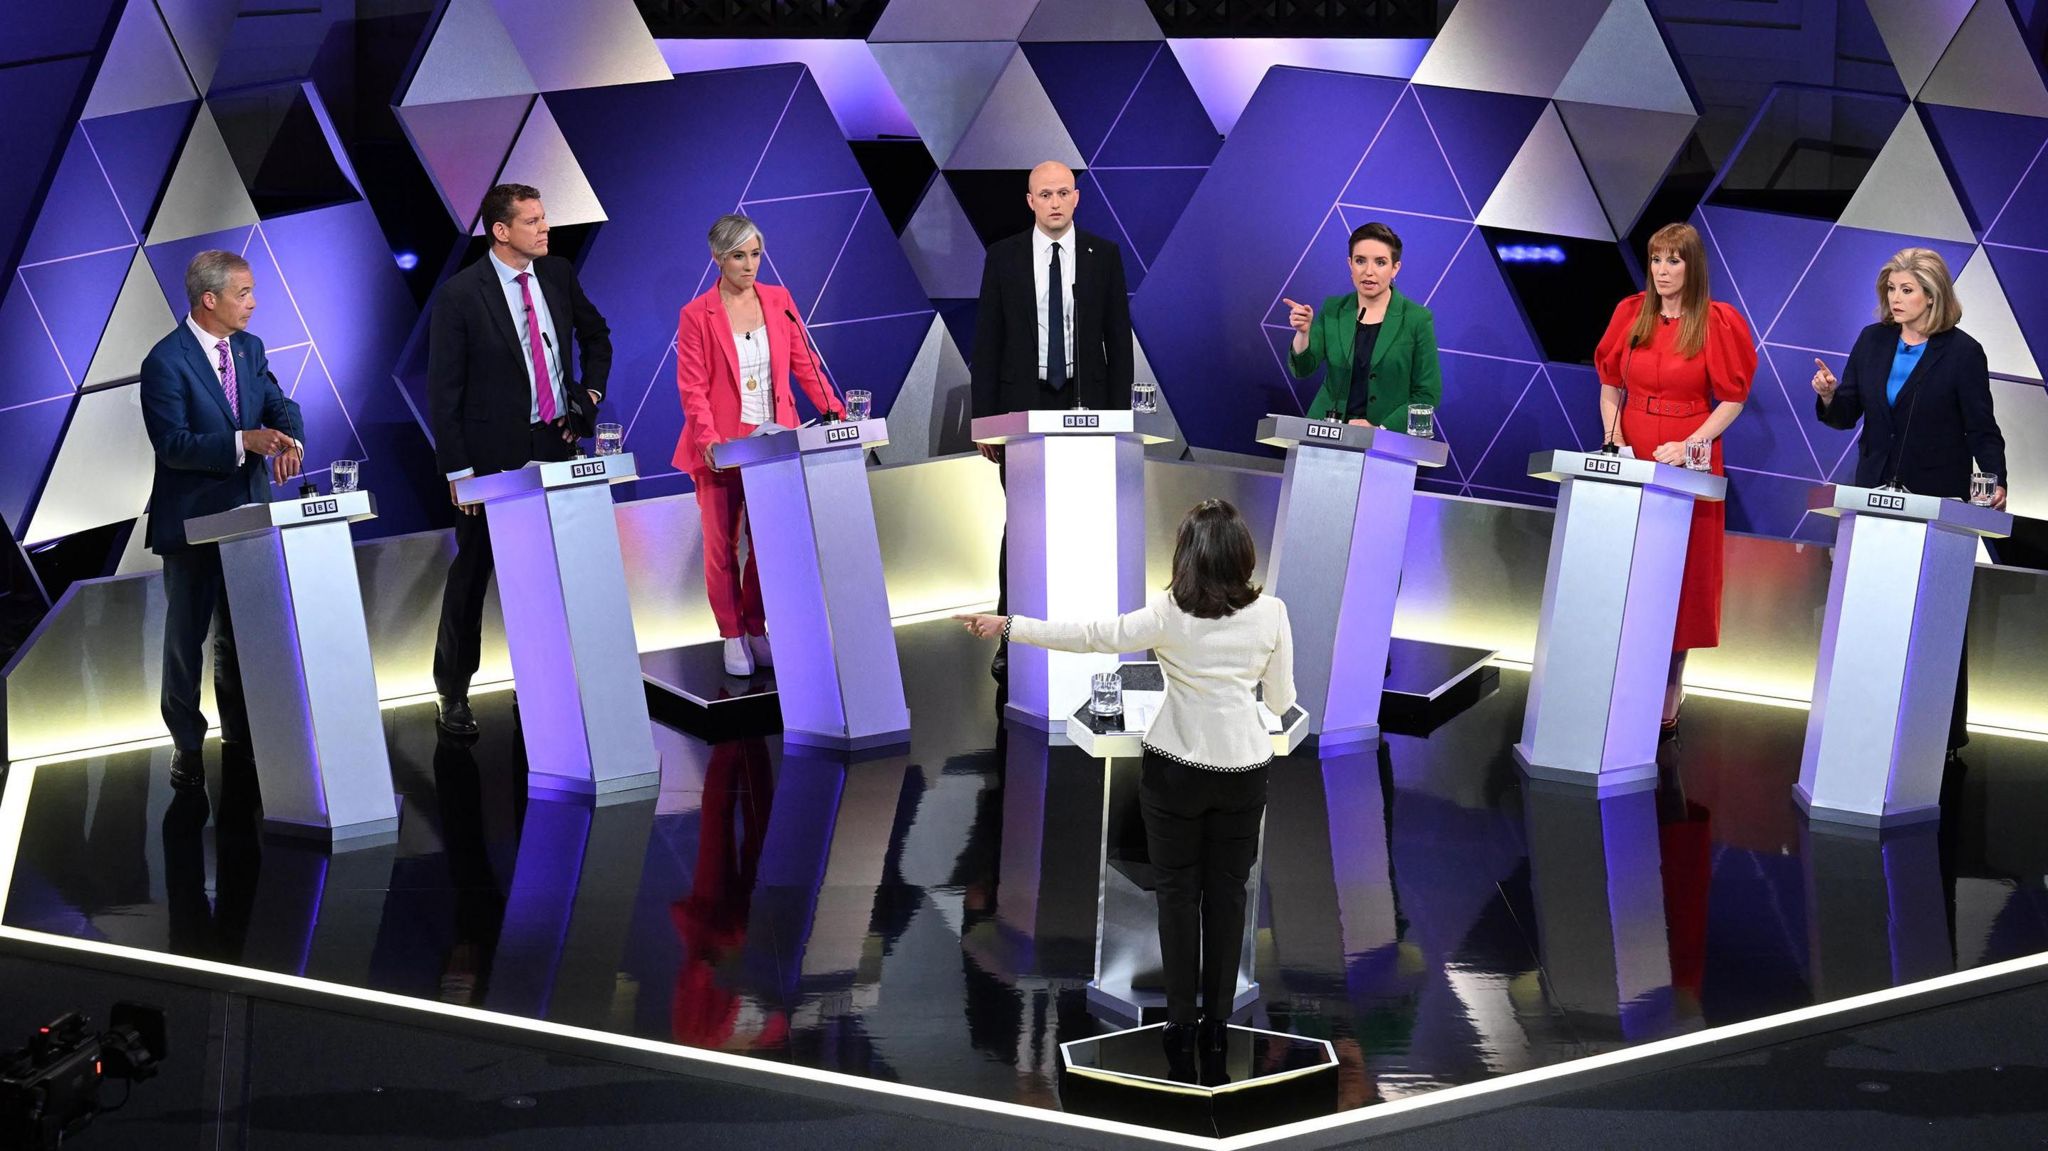 Mishal Husain moderates the first BBC election debate